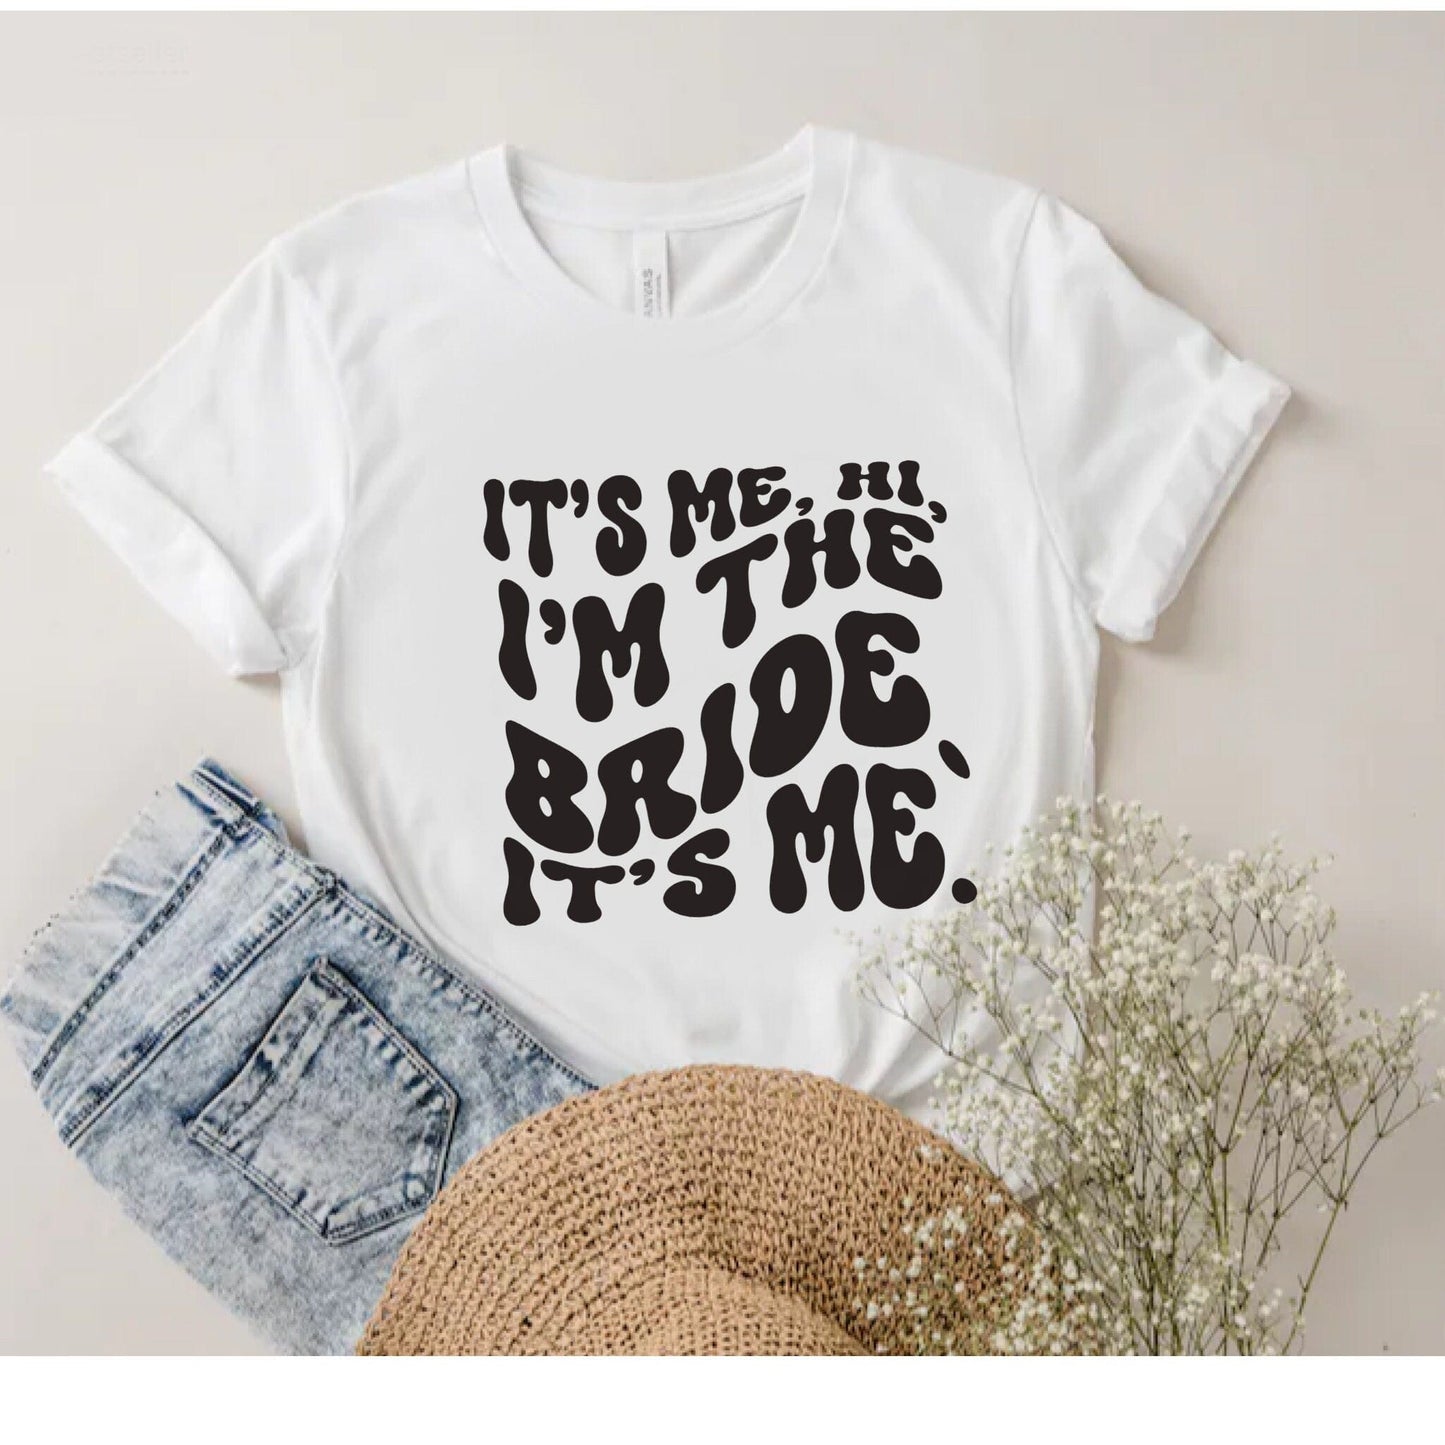 Purple LadyBug Decor Custom Bride Shirt | Its Me Hi I'm The Bride It's Me | Bride tshirt | Bride-To-Be | Bachelorette Party Shirts | Bride Gift | Wedding Gift